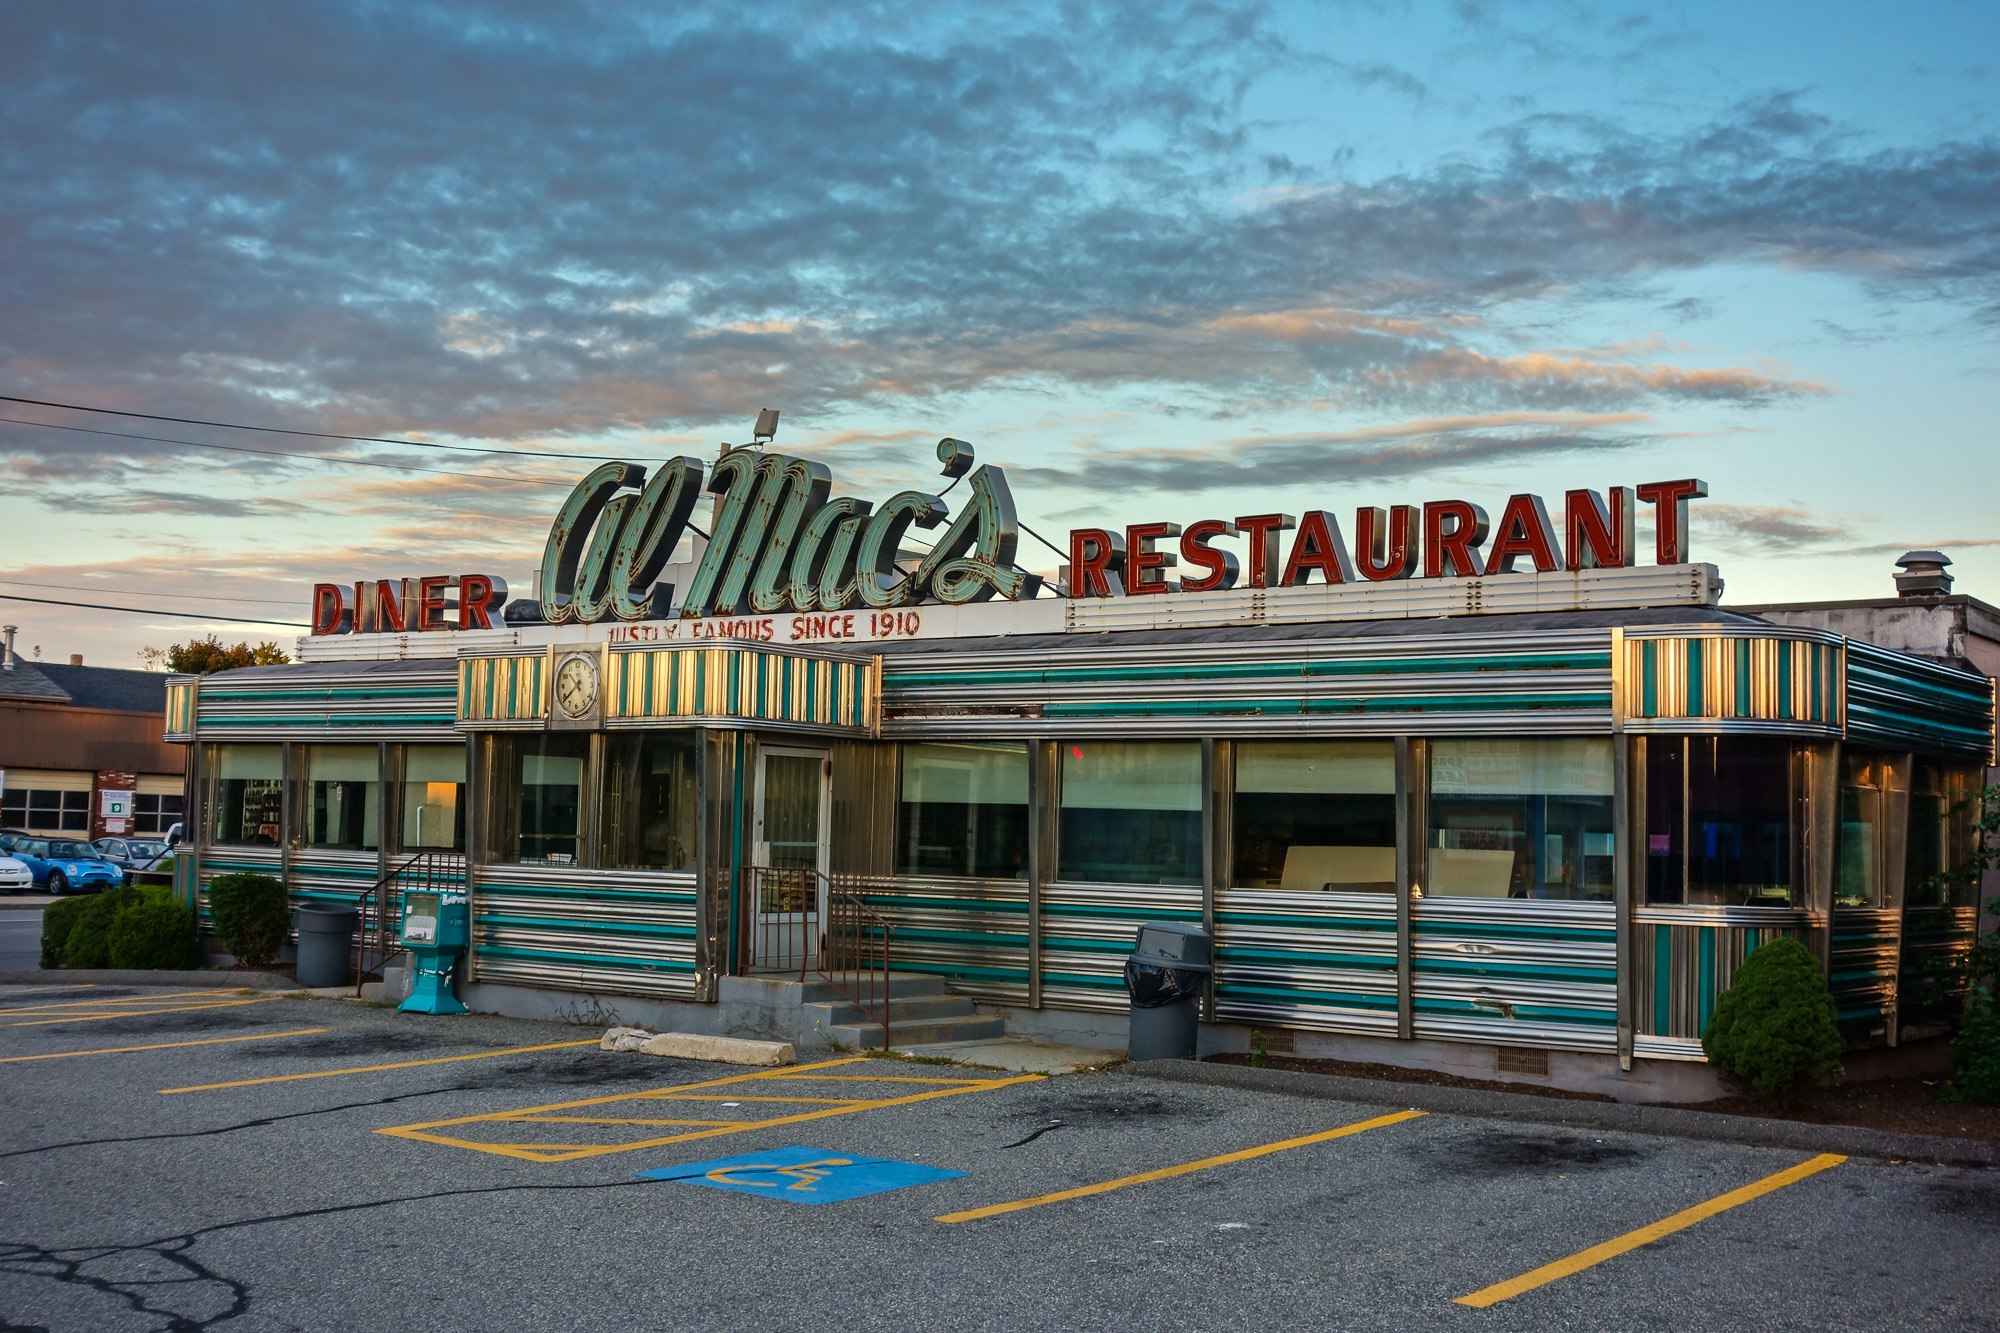 Al Mac's Diner-Restaurant - Wikipedia